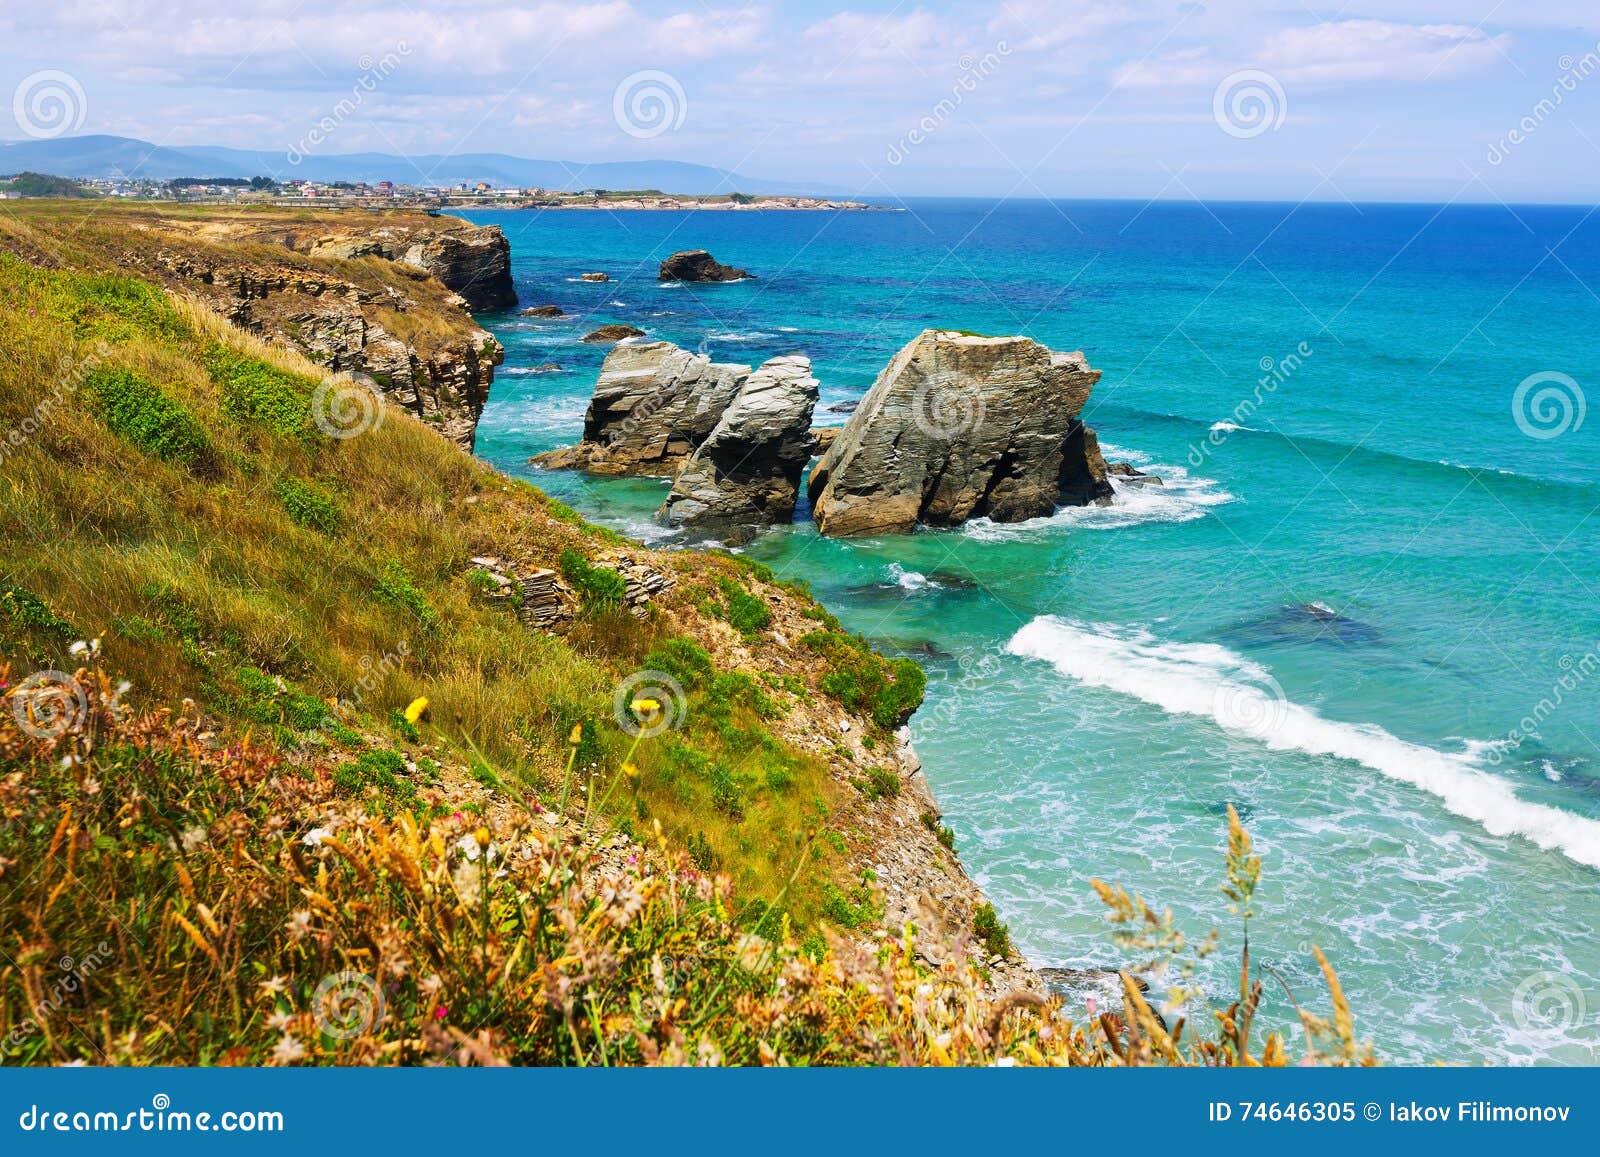 rocky cantabric coast